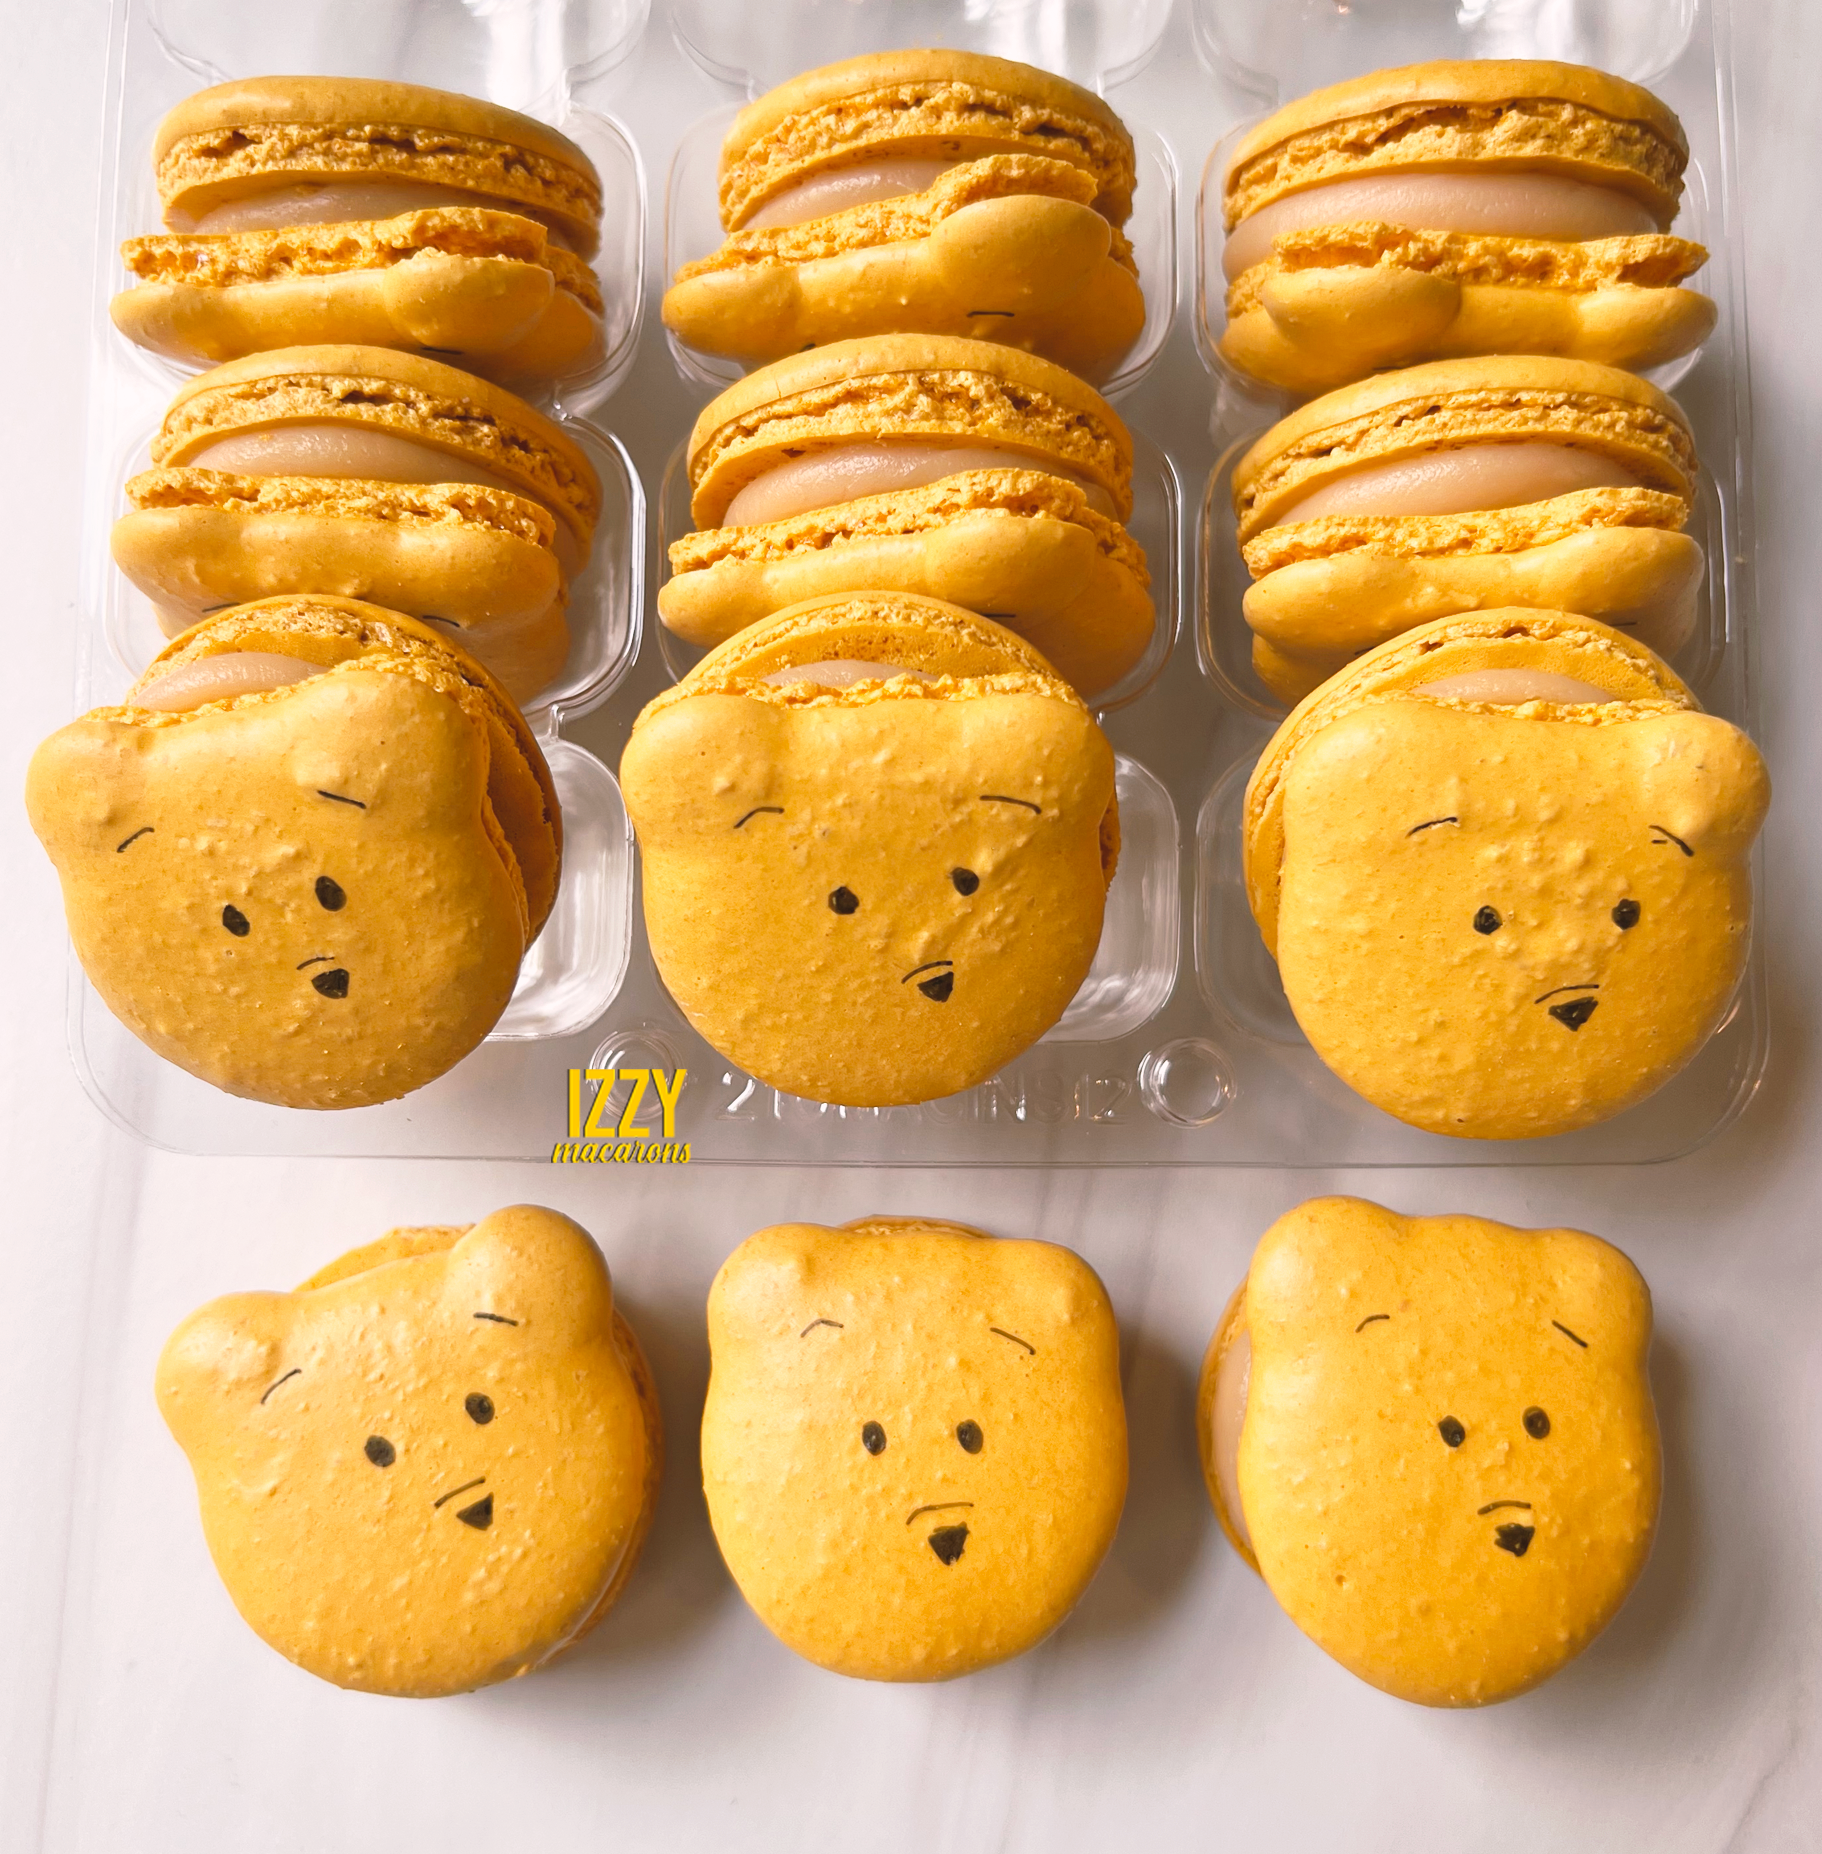 Pooh Macarons - Izzy Macarons